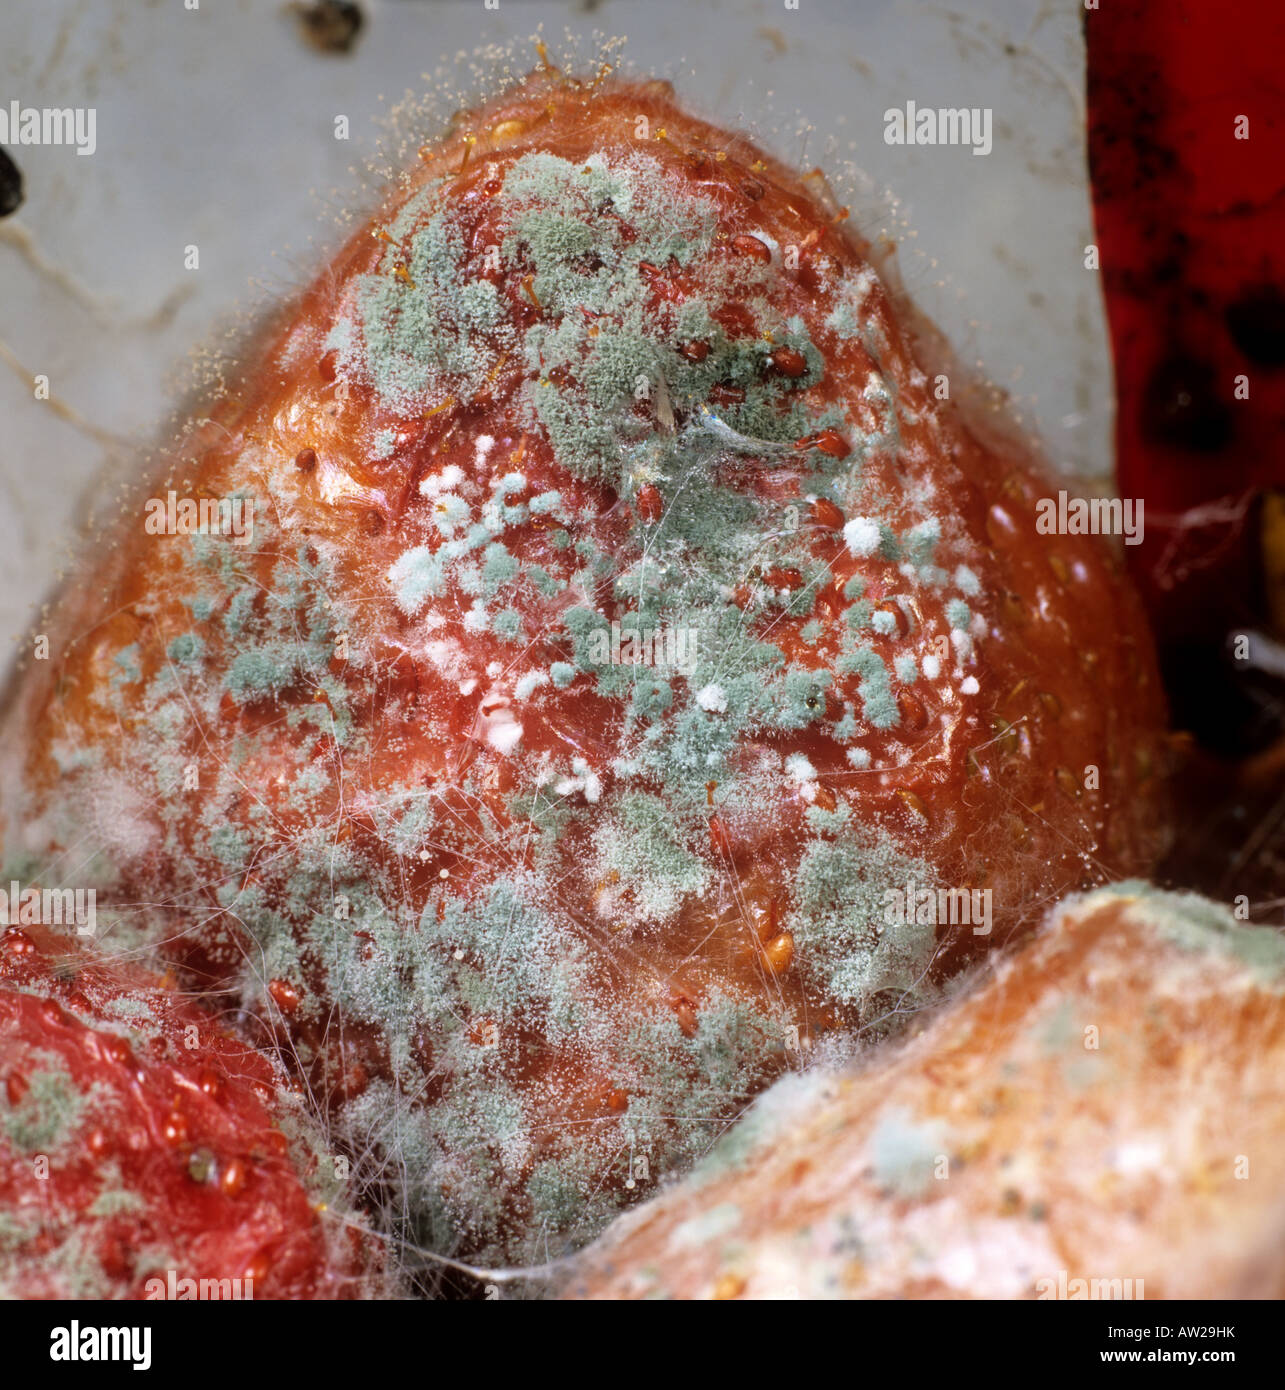 Storage mould Penicillium sp with other fungi on strawberry fruit Stock Photo